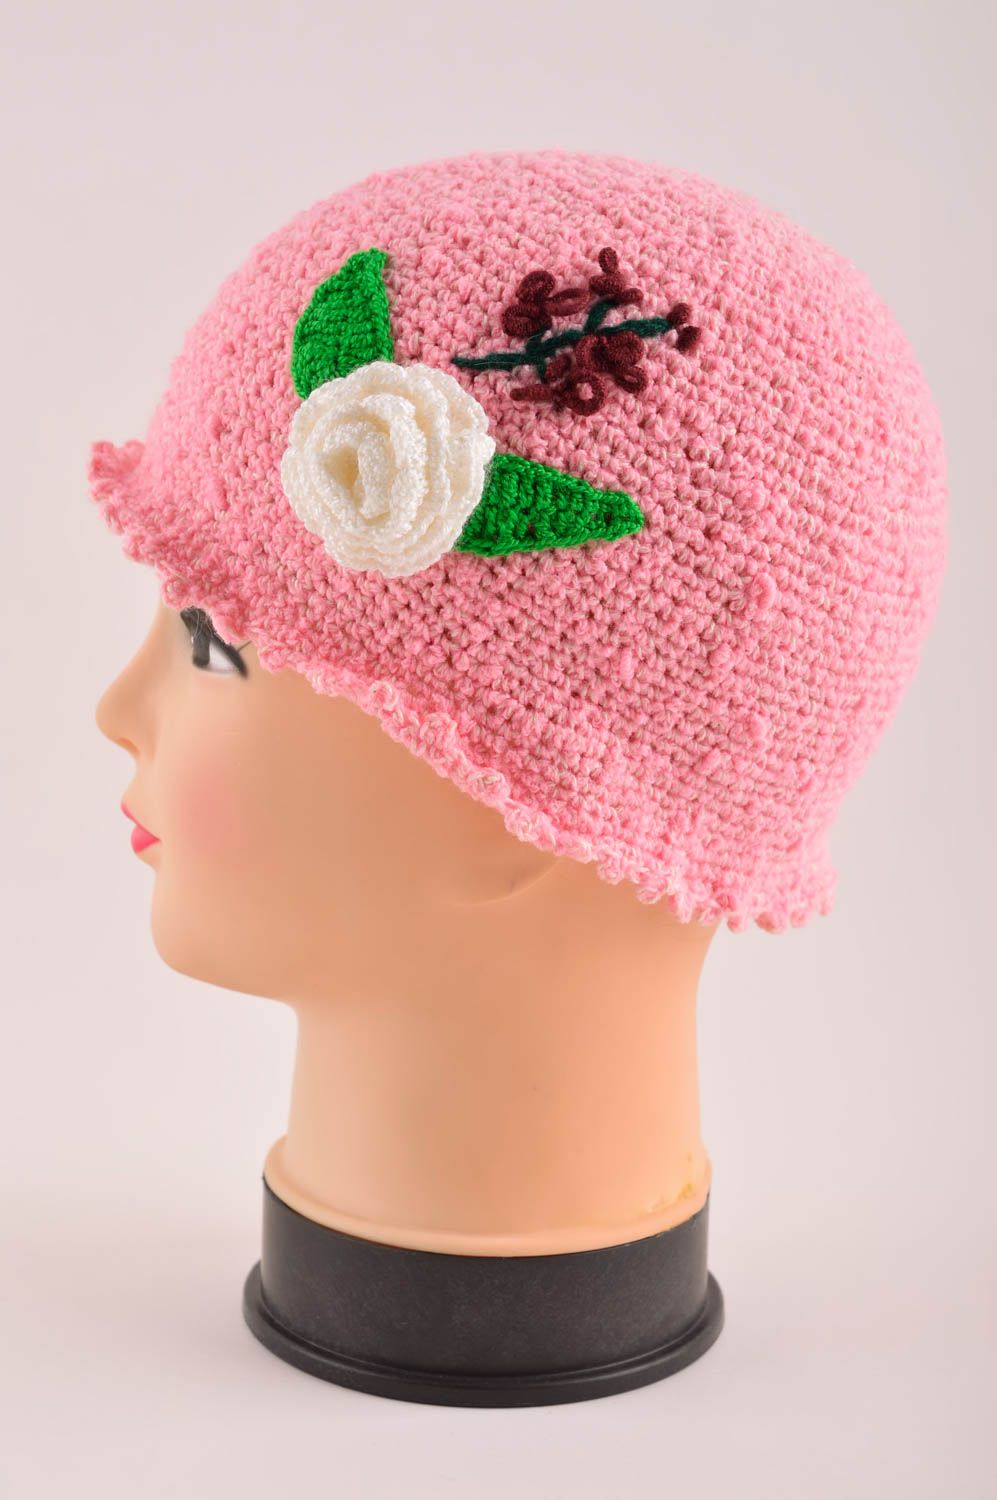 Handmade hat for winter unusual warm hat designer hat for baby gift ideas photo 3